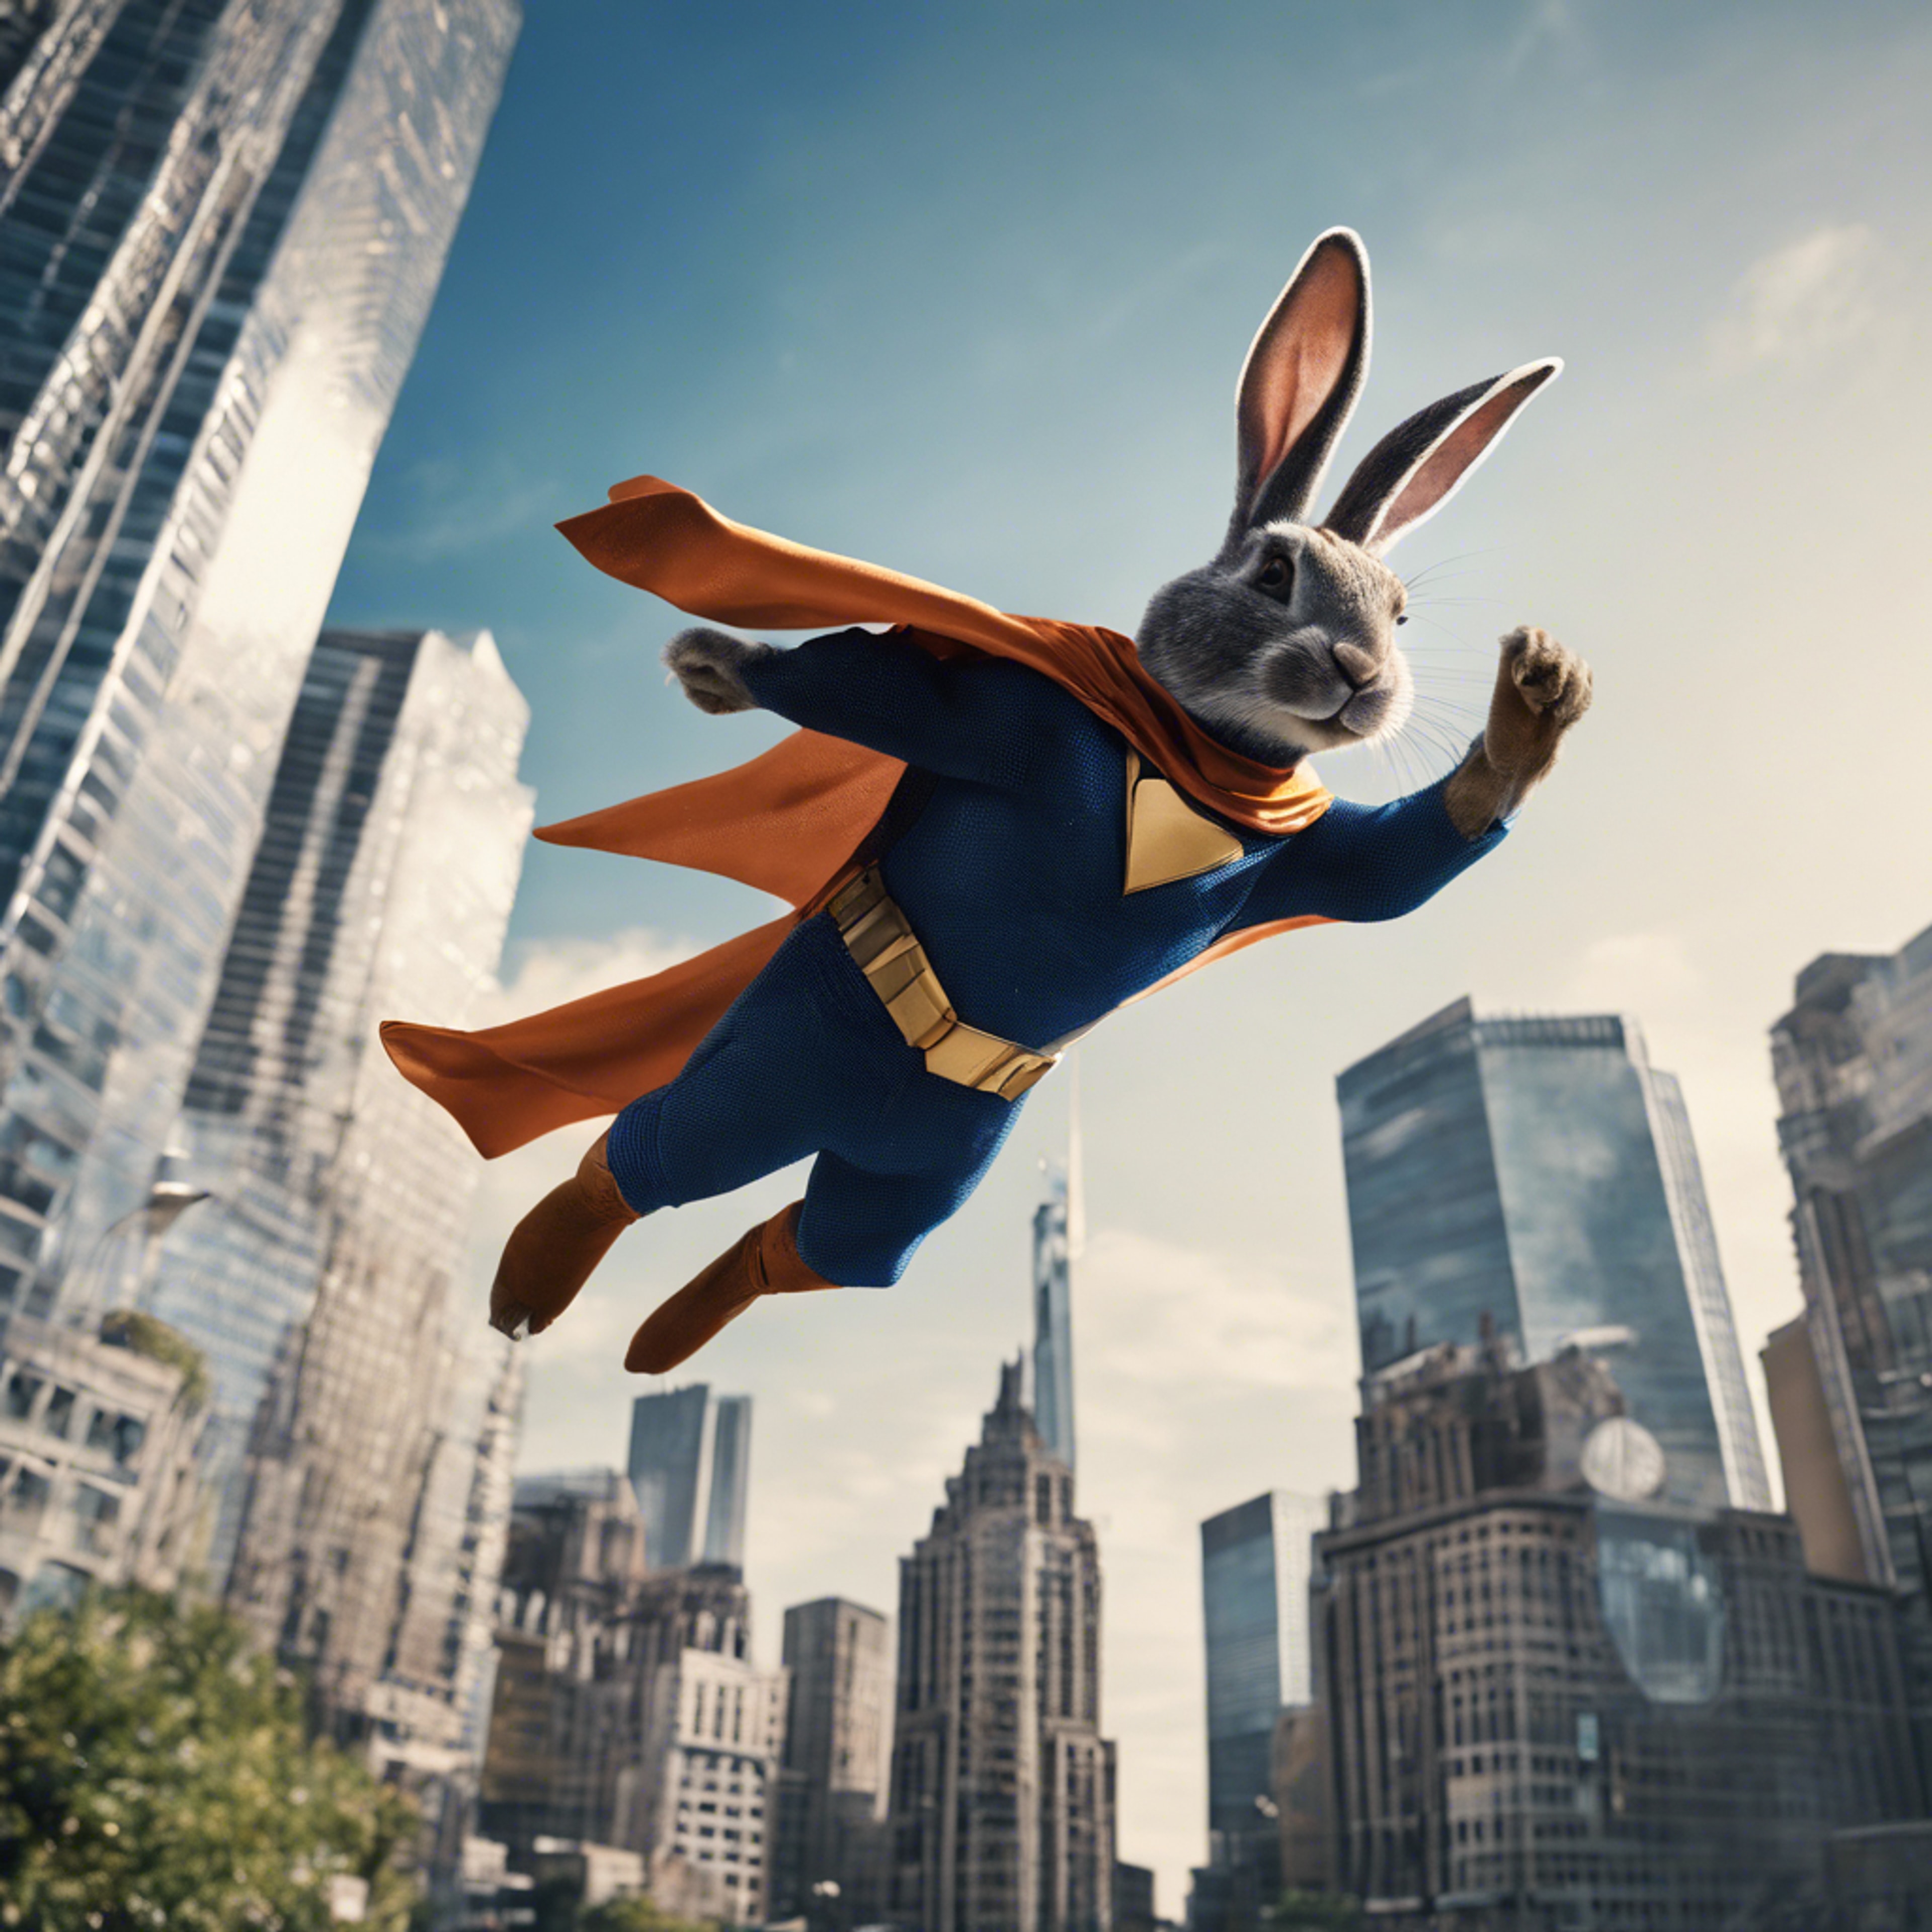 A rabbit superhero soaring above skyscrapers in a bustling city.壁紙[841b91138e24419cbc55]